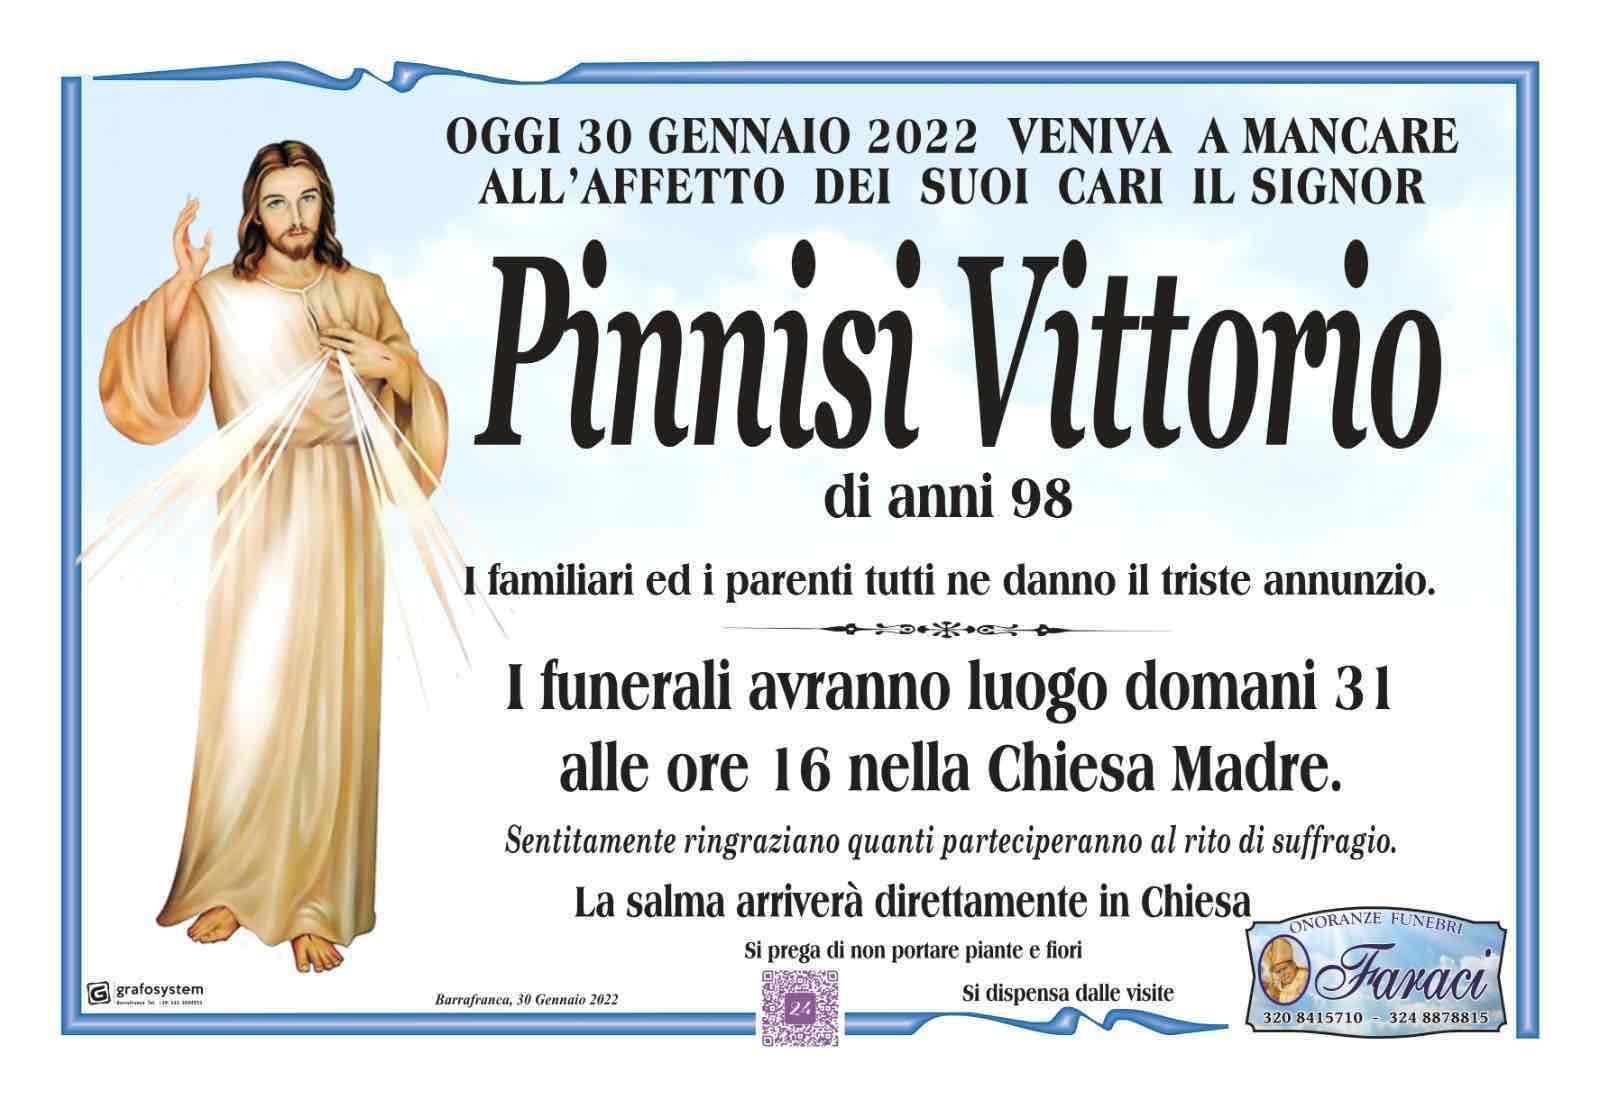 Vittorio Pinnisi